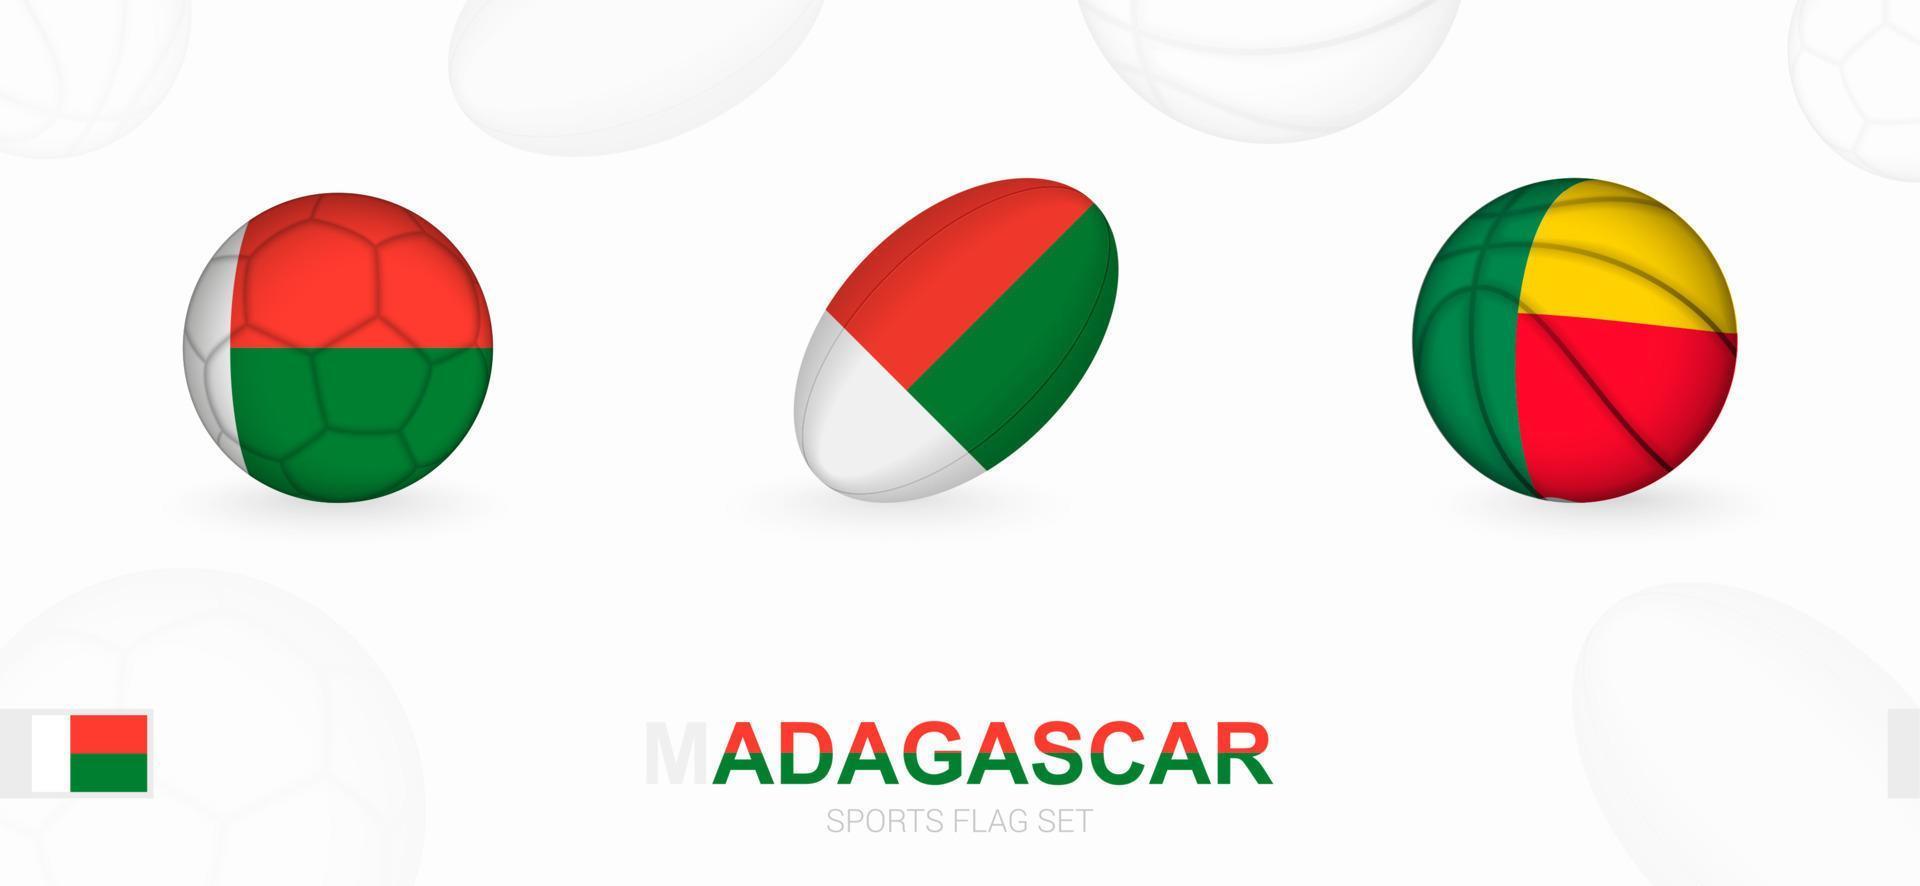 sport- pictogrammen voor Amerikaans voetbal, rugby en basketbal met de vlag van Madagascar. vector